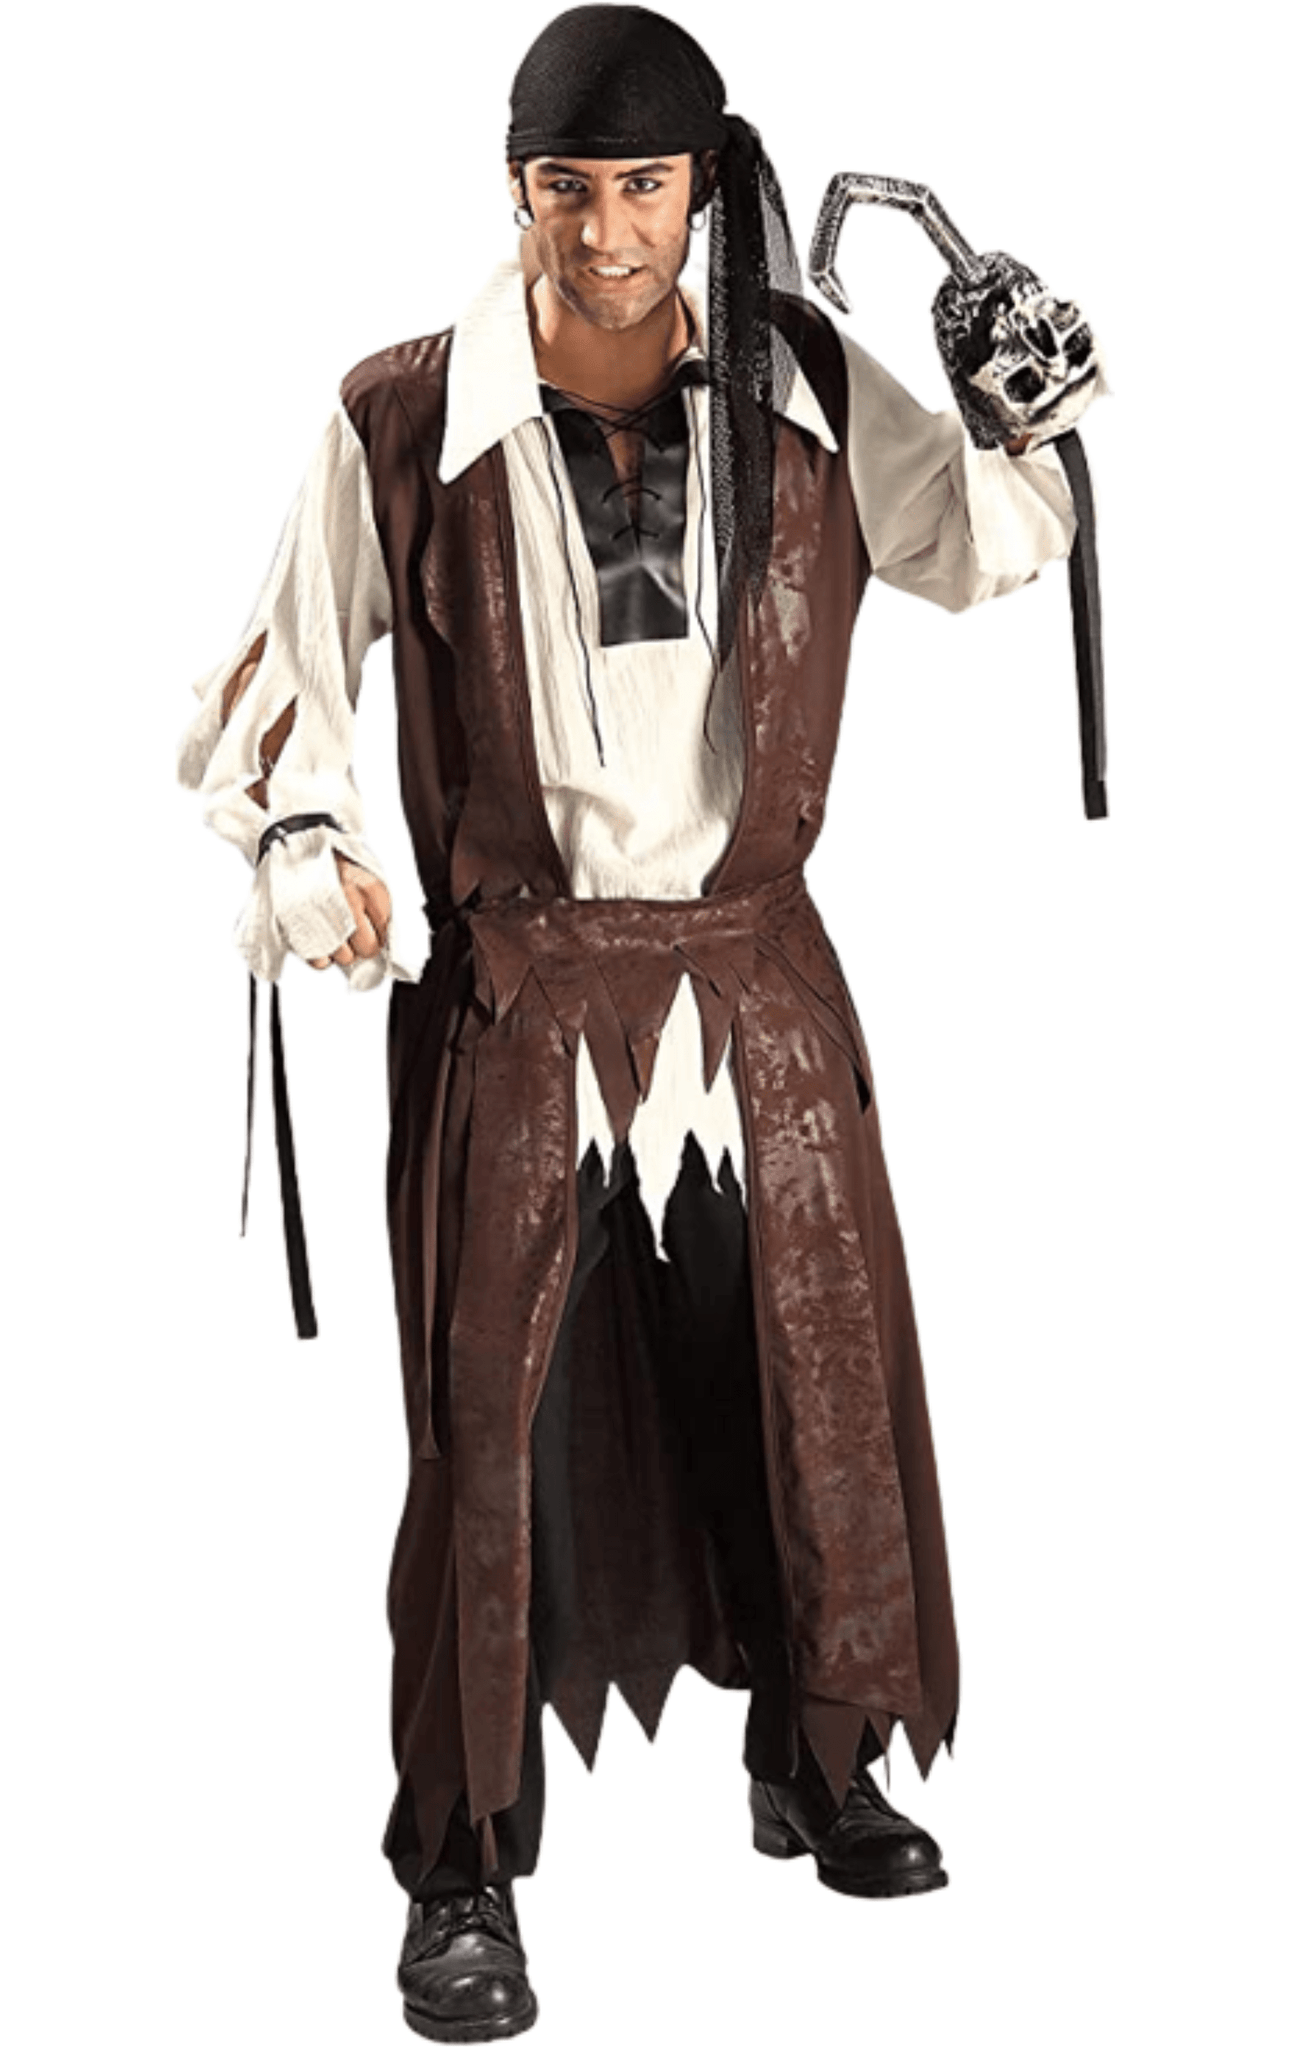 The Seven Seas Caribbean Pirate Costume